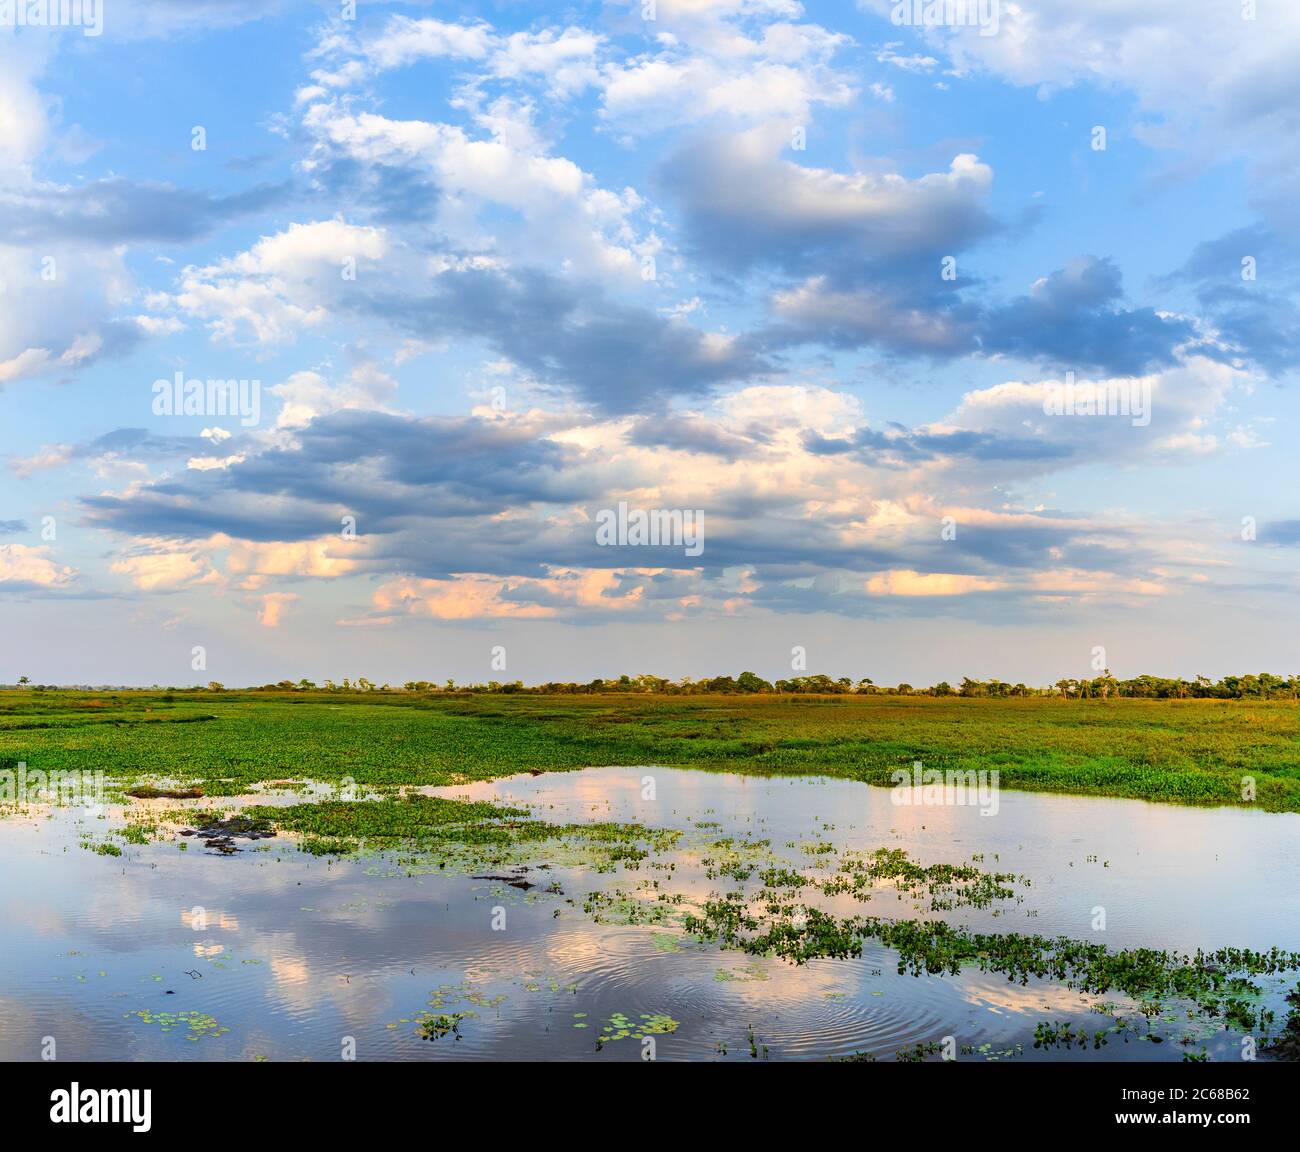 View of wetland, Pantanal region, Brazil, South America Stock Photo